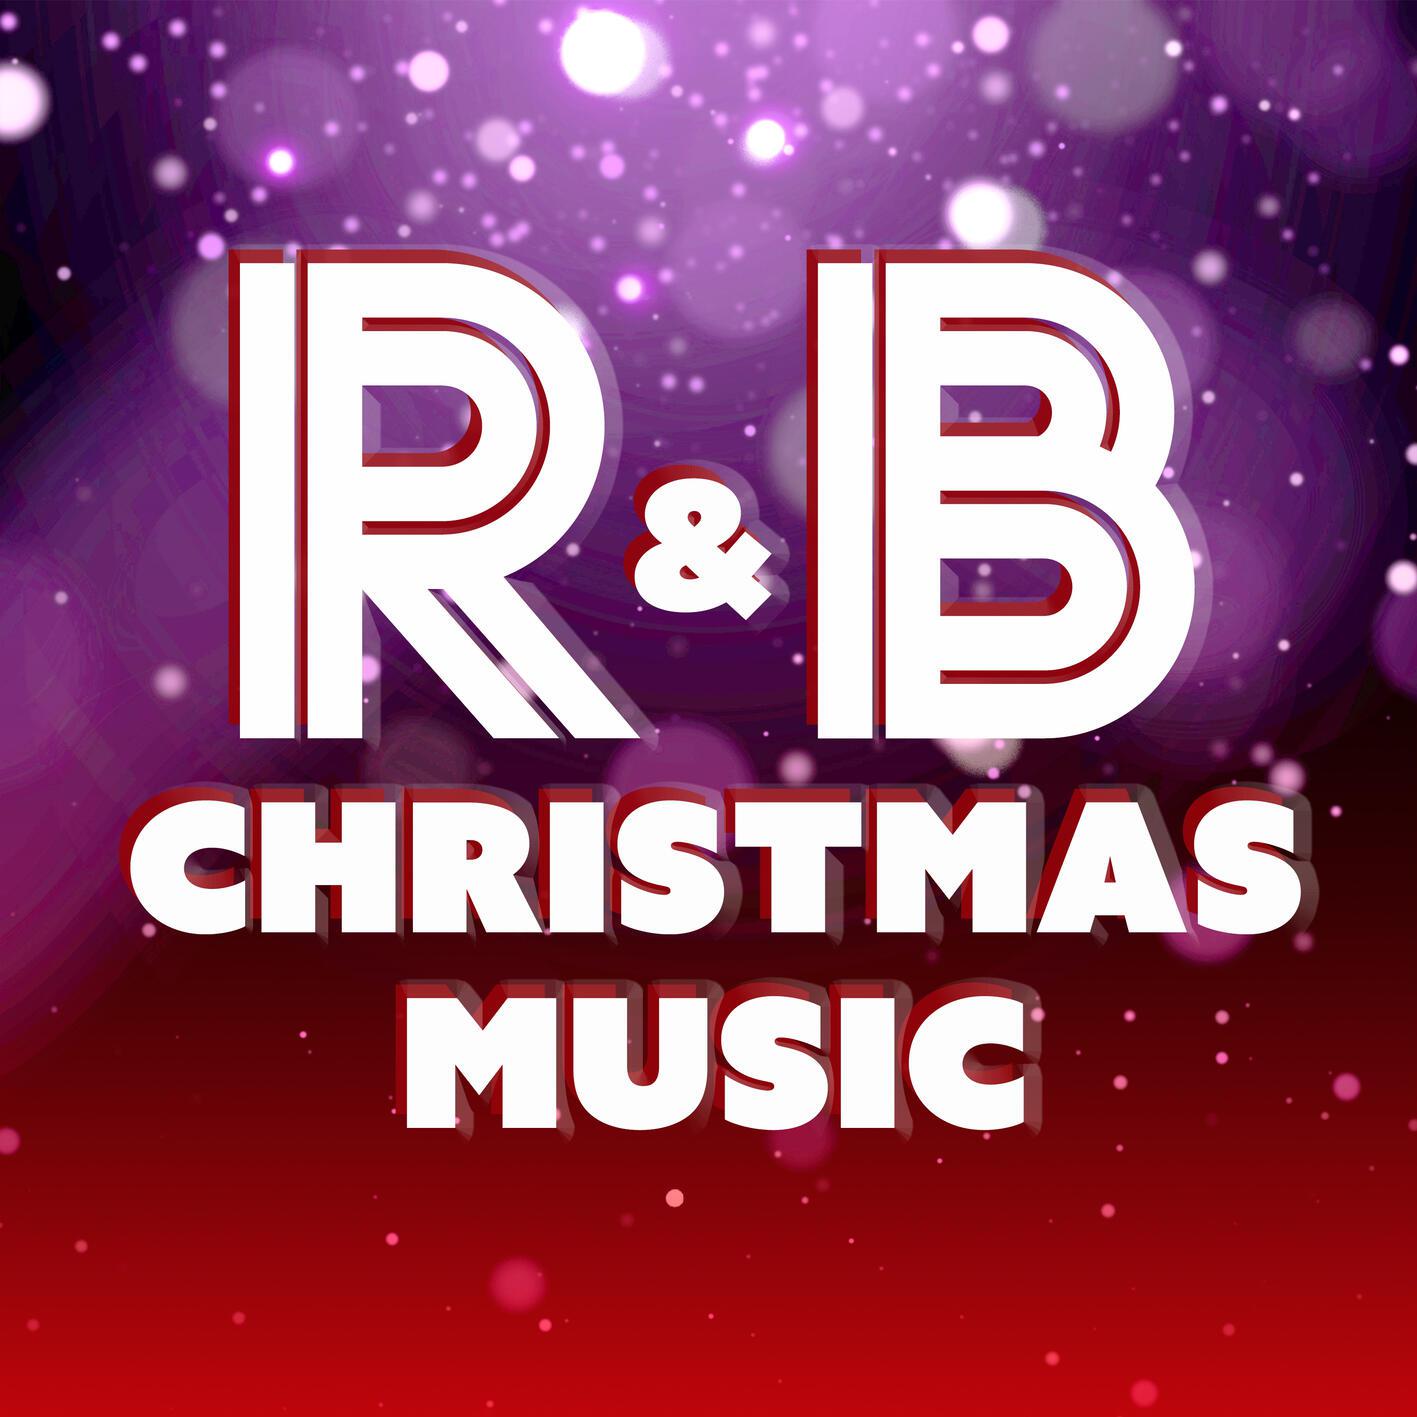 John Legend - Merry Christmas Baby / Give Love on Christmas Day